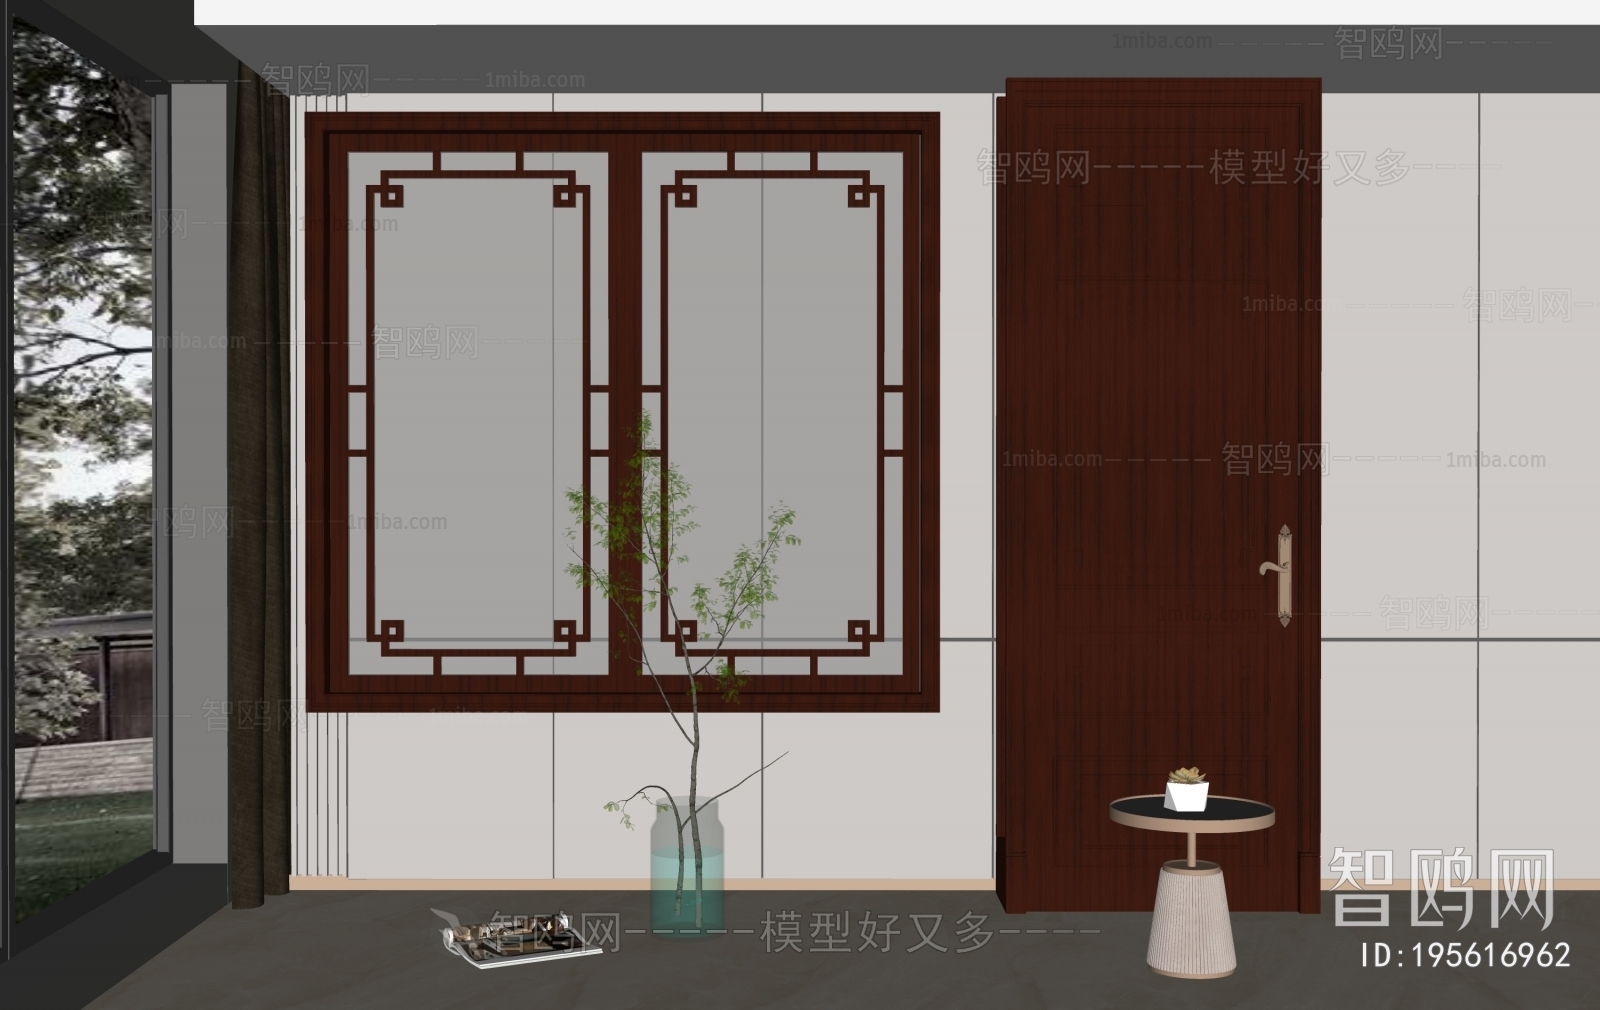 New Chinese Style Window